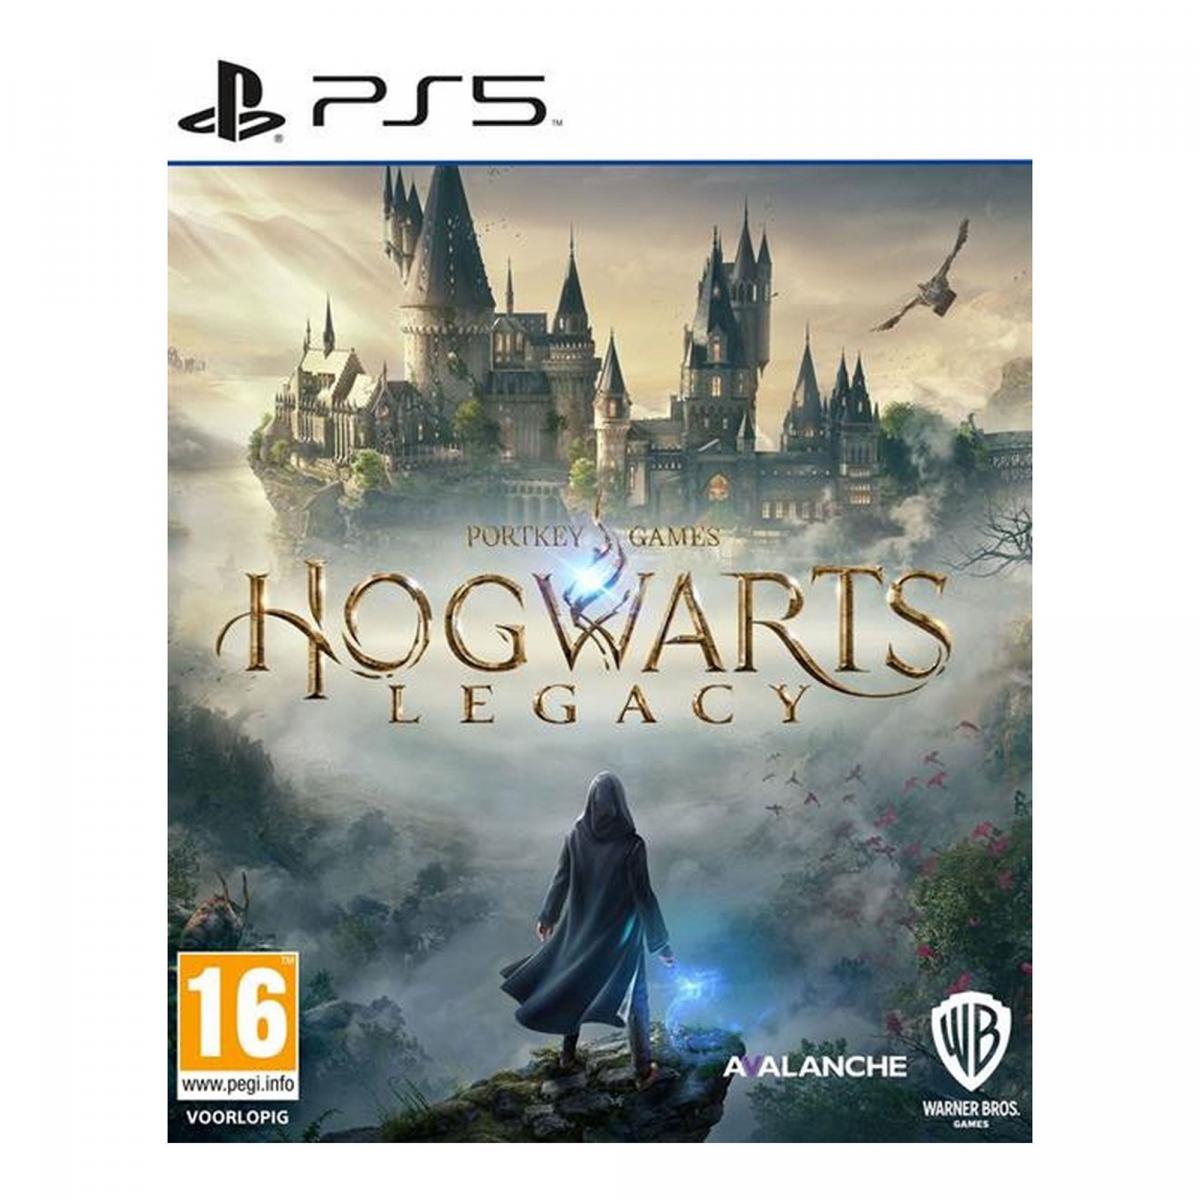 ‘Hogwarts Legacy’ voor PS5